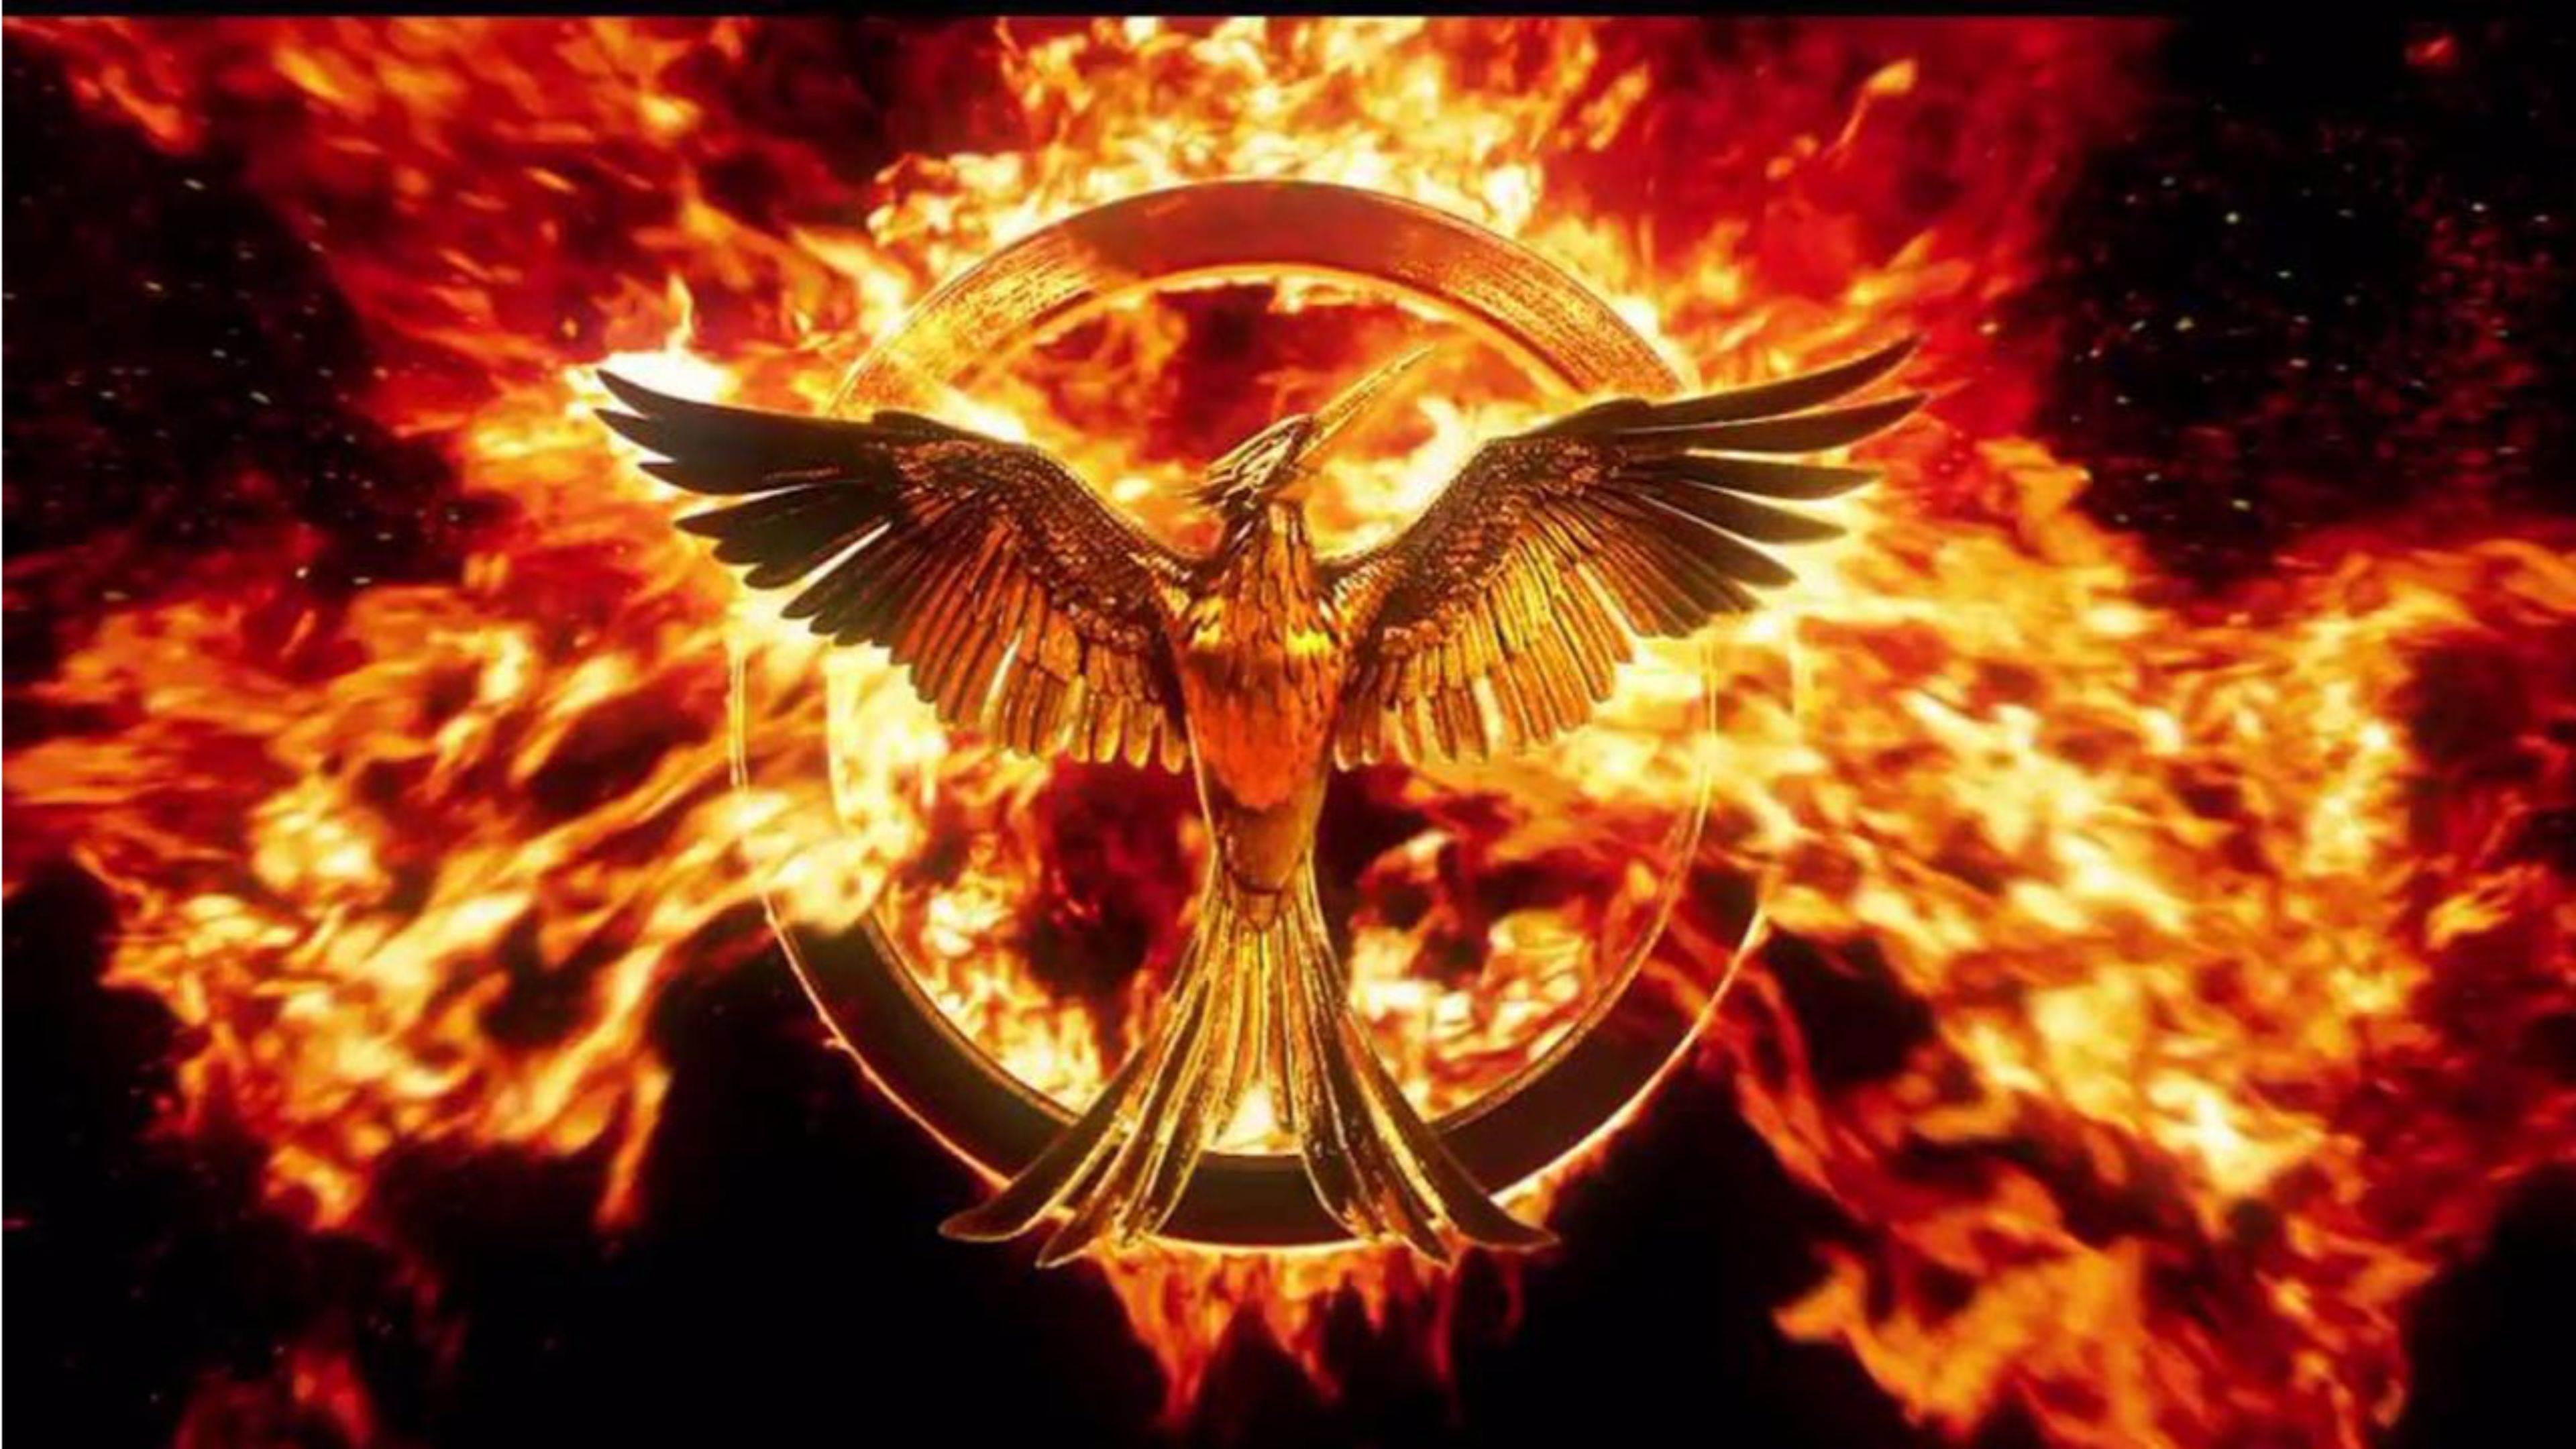  The Hunger Games Mockingjay Part 2 4K Wallpaper Free 4K Wallpaper